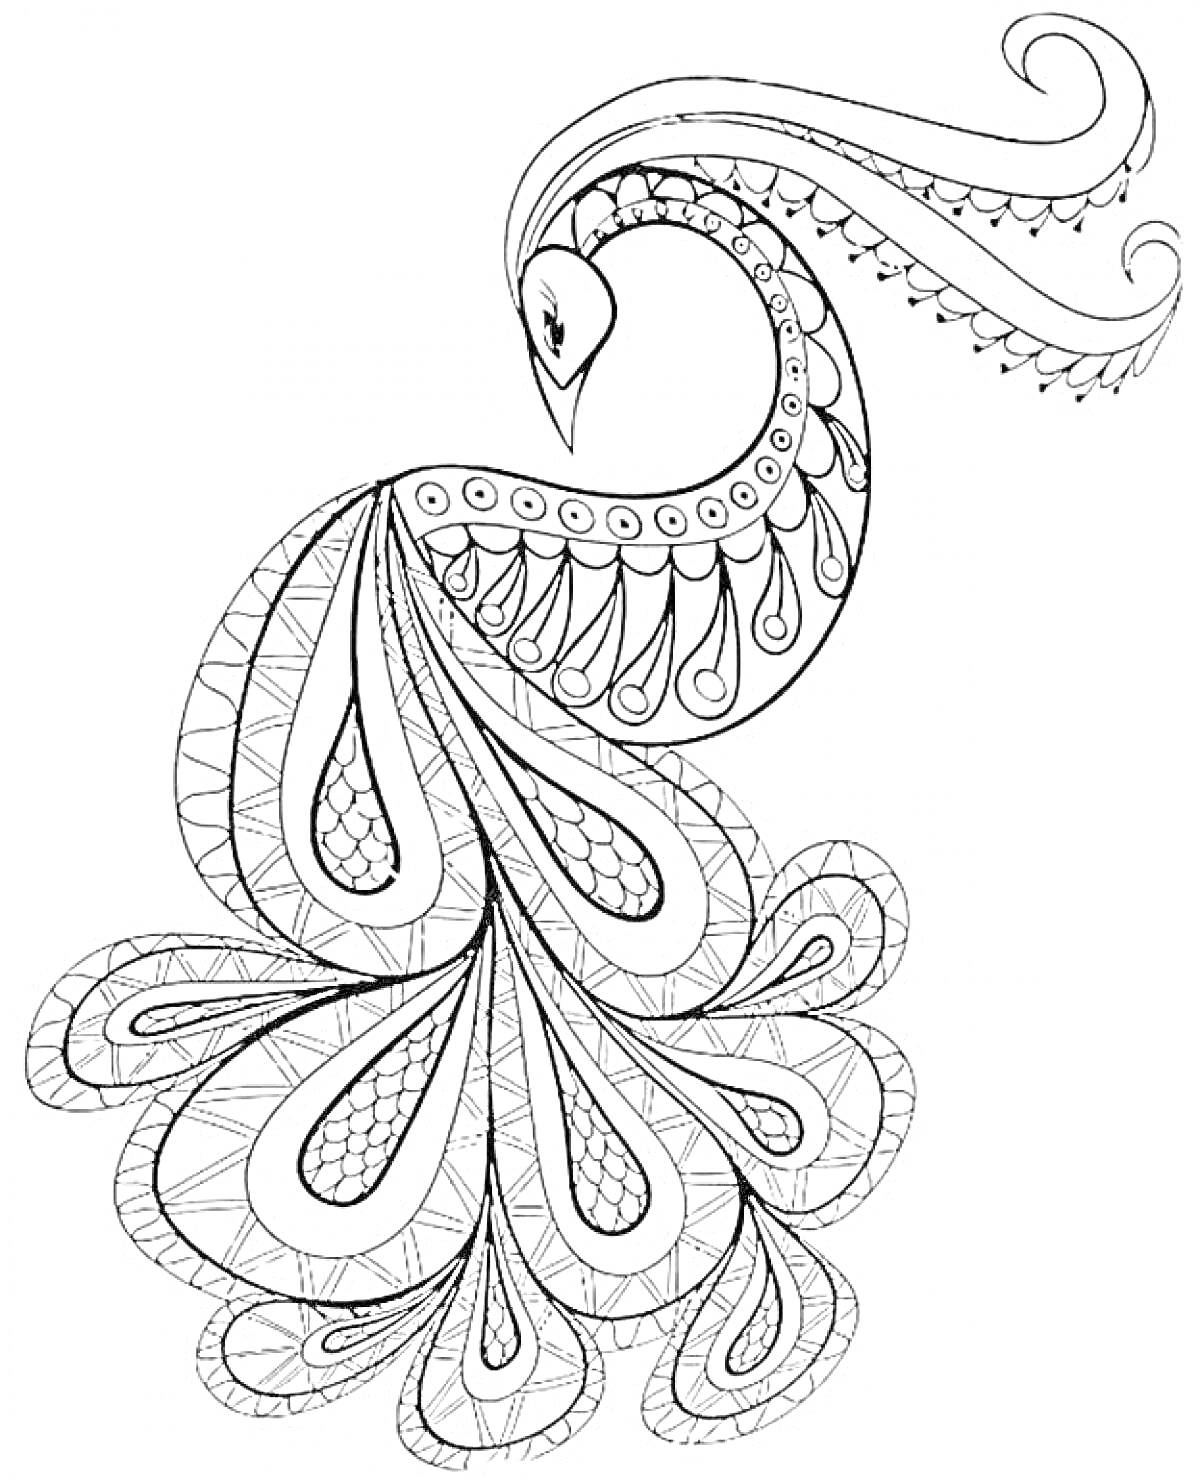 Раскраска Антистресс раскраска павлин с узорами и декоративными элементами на хвосте и теле